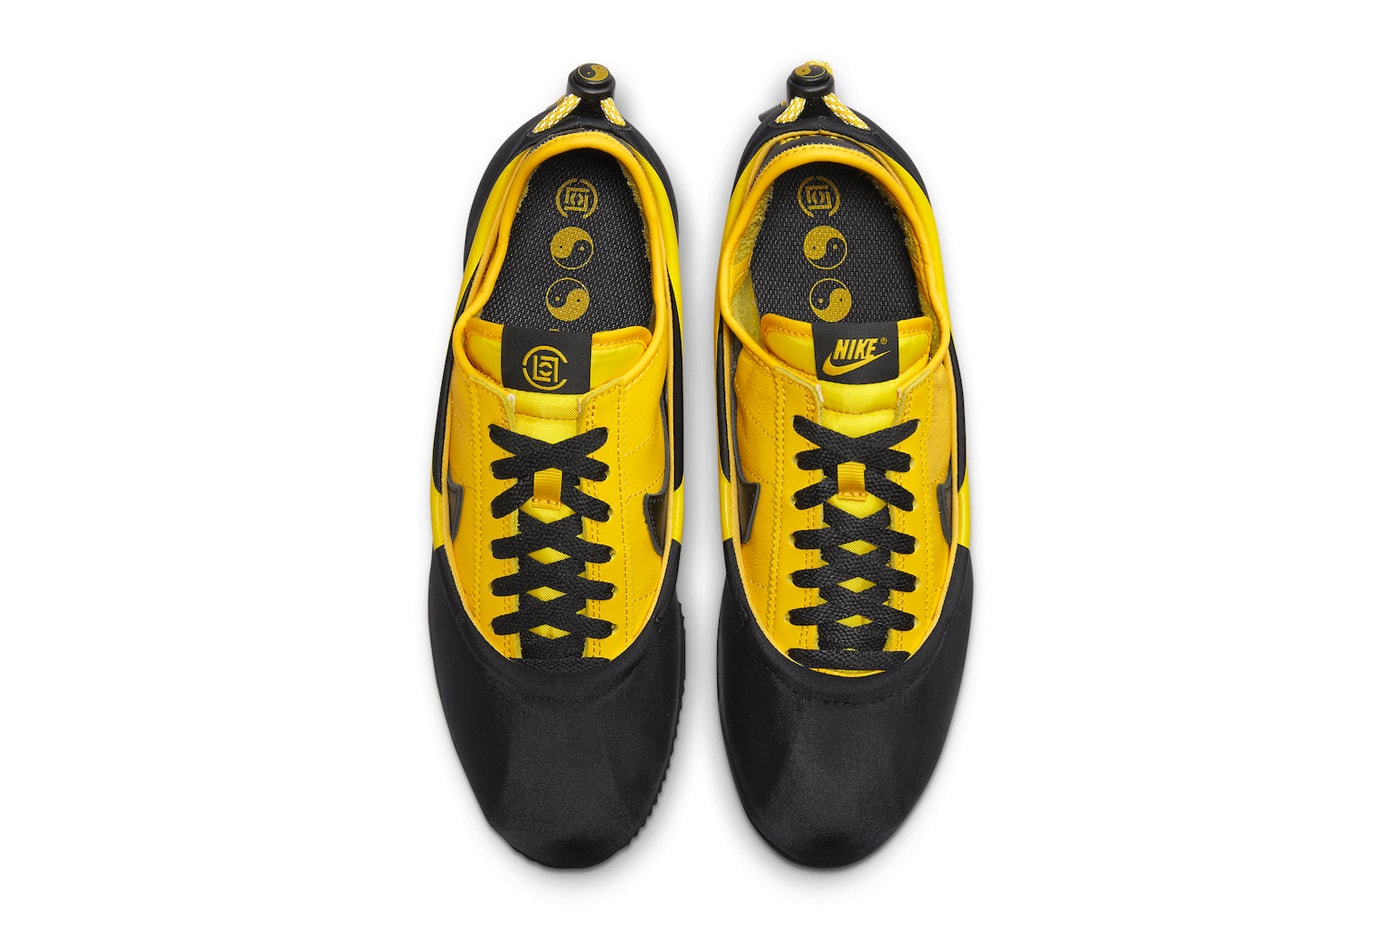 CLOT Nike CLOTEZ Bruce Lee Official Look Release Info dz3239-001 Date Buy Price  Black Varsity Maize Edison Chen